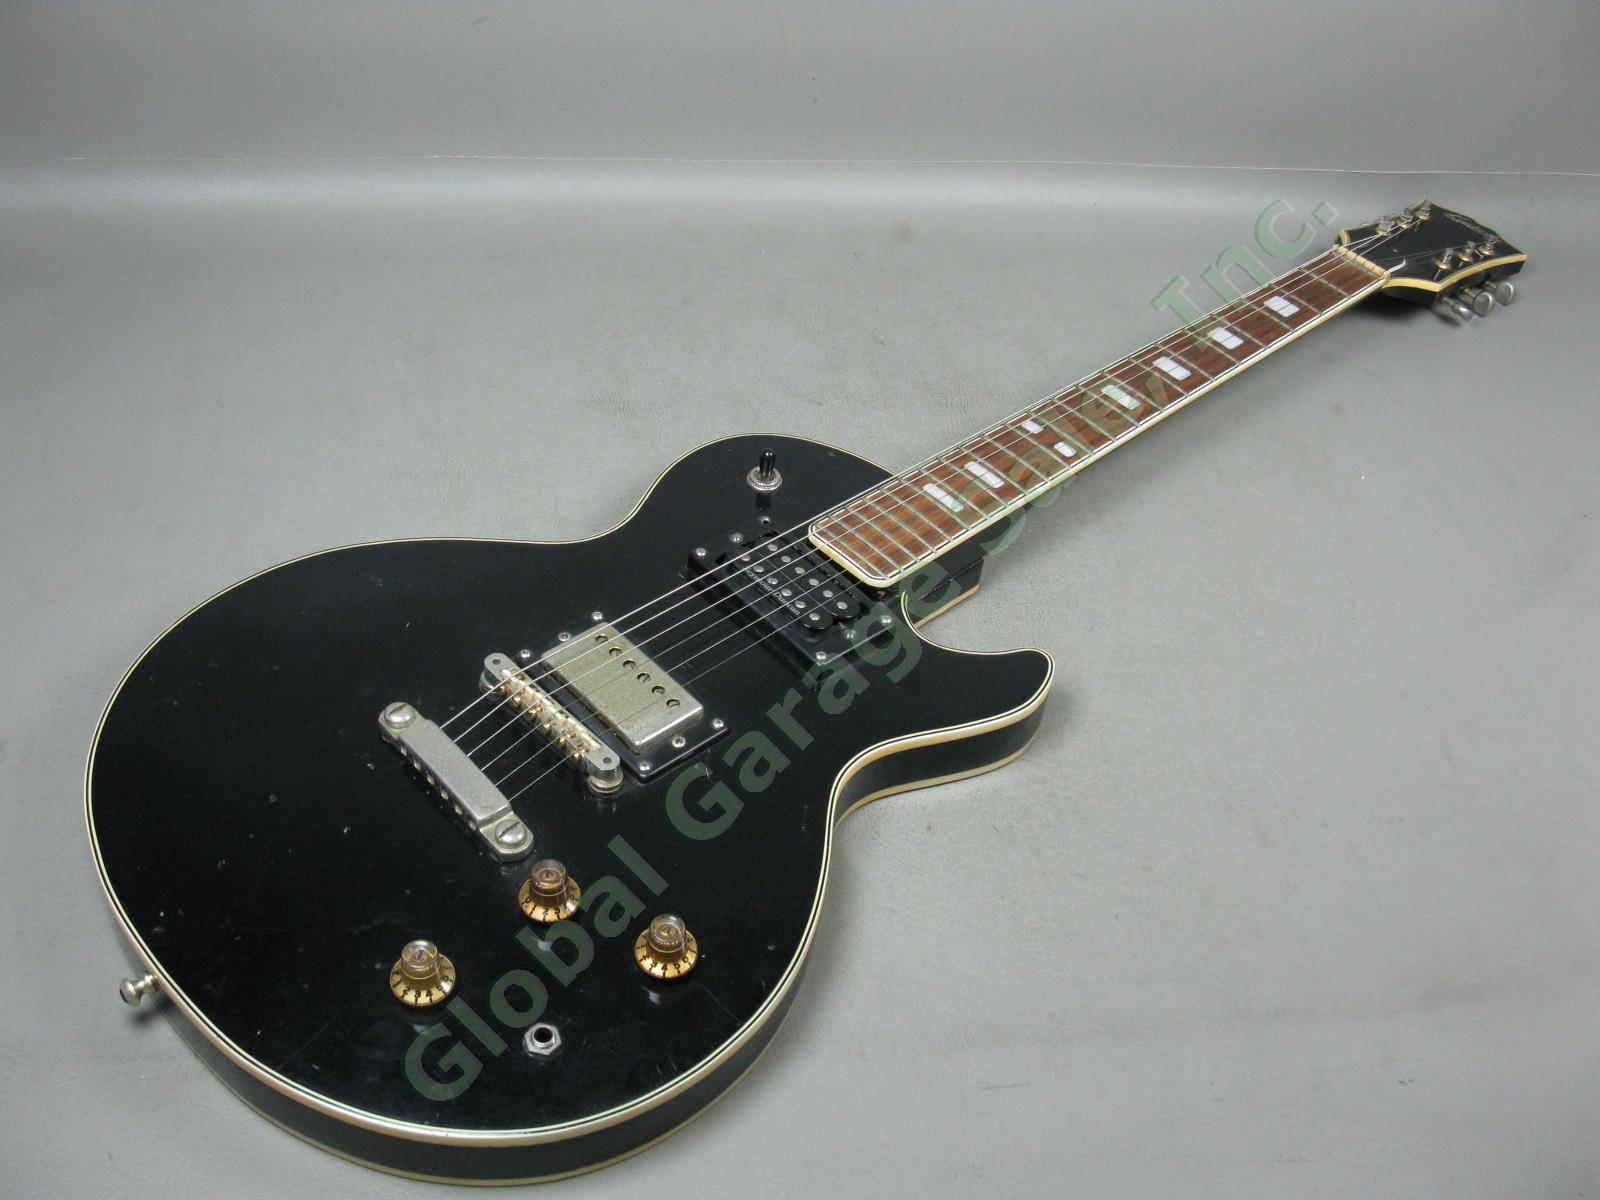 Vtg 70s Black Kimberly LP Style Electric Guitar Seymour Duncan Pickup MIJ Teisco